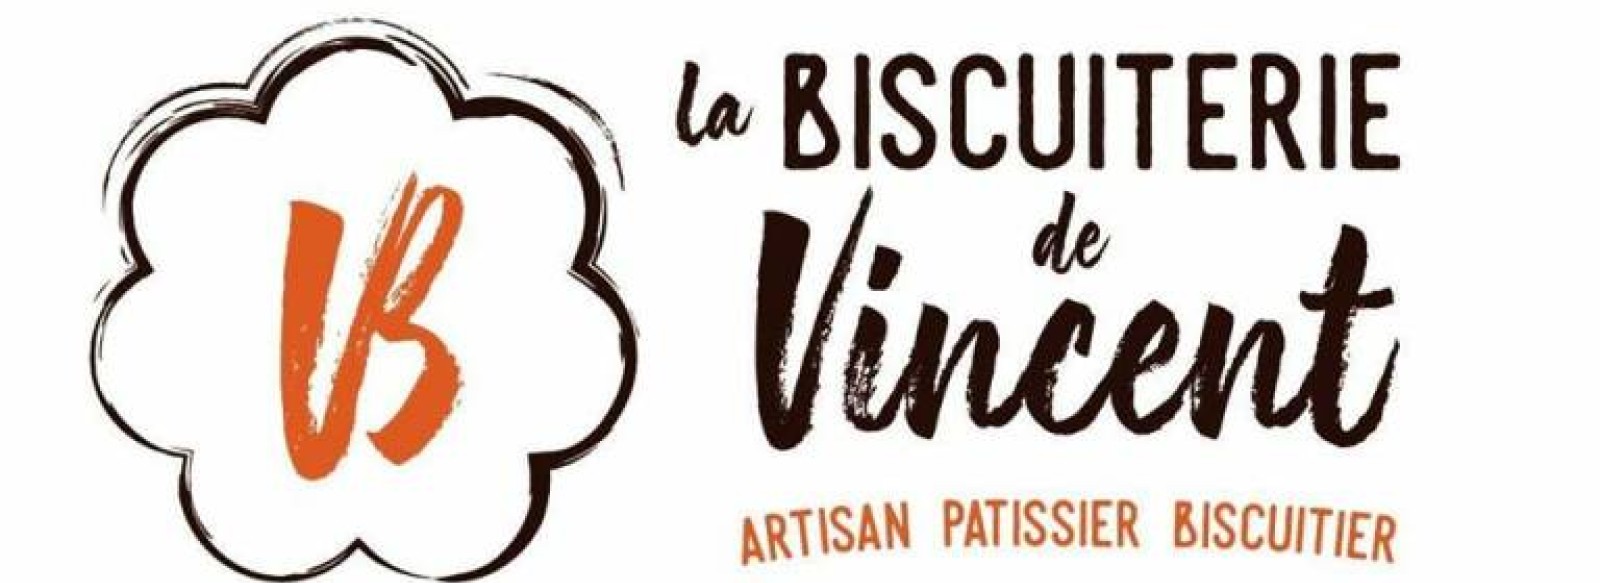 La Biscuiterie de Vincent